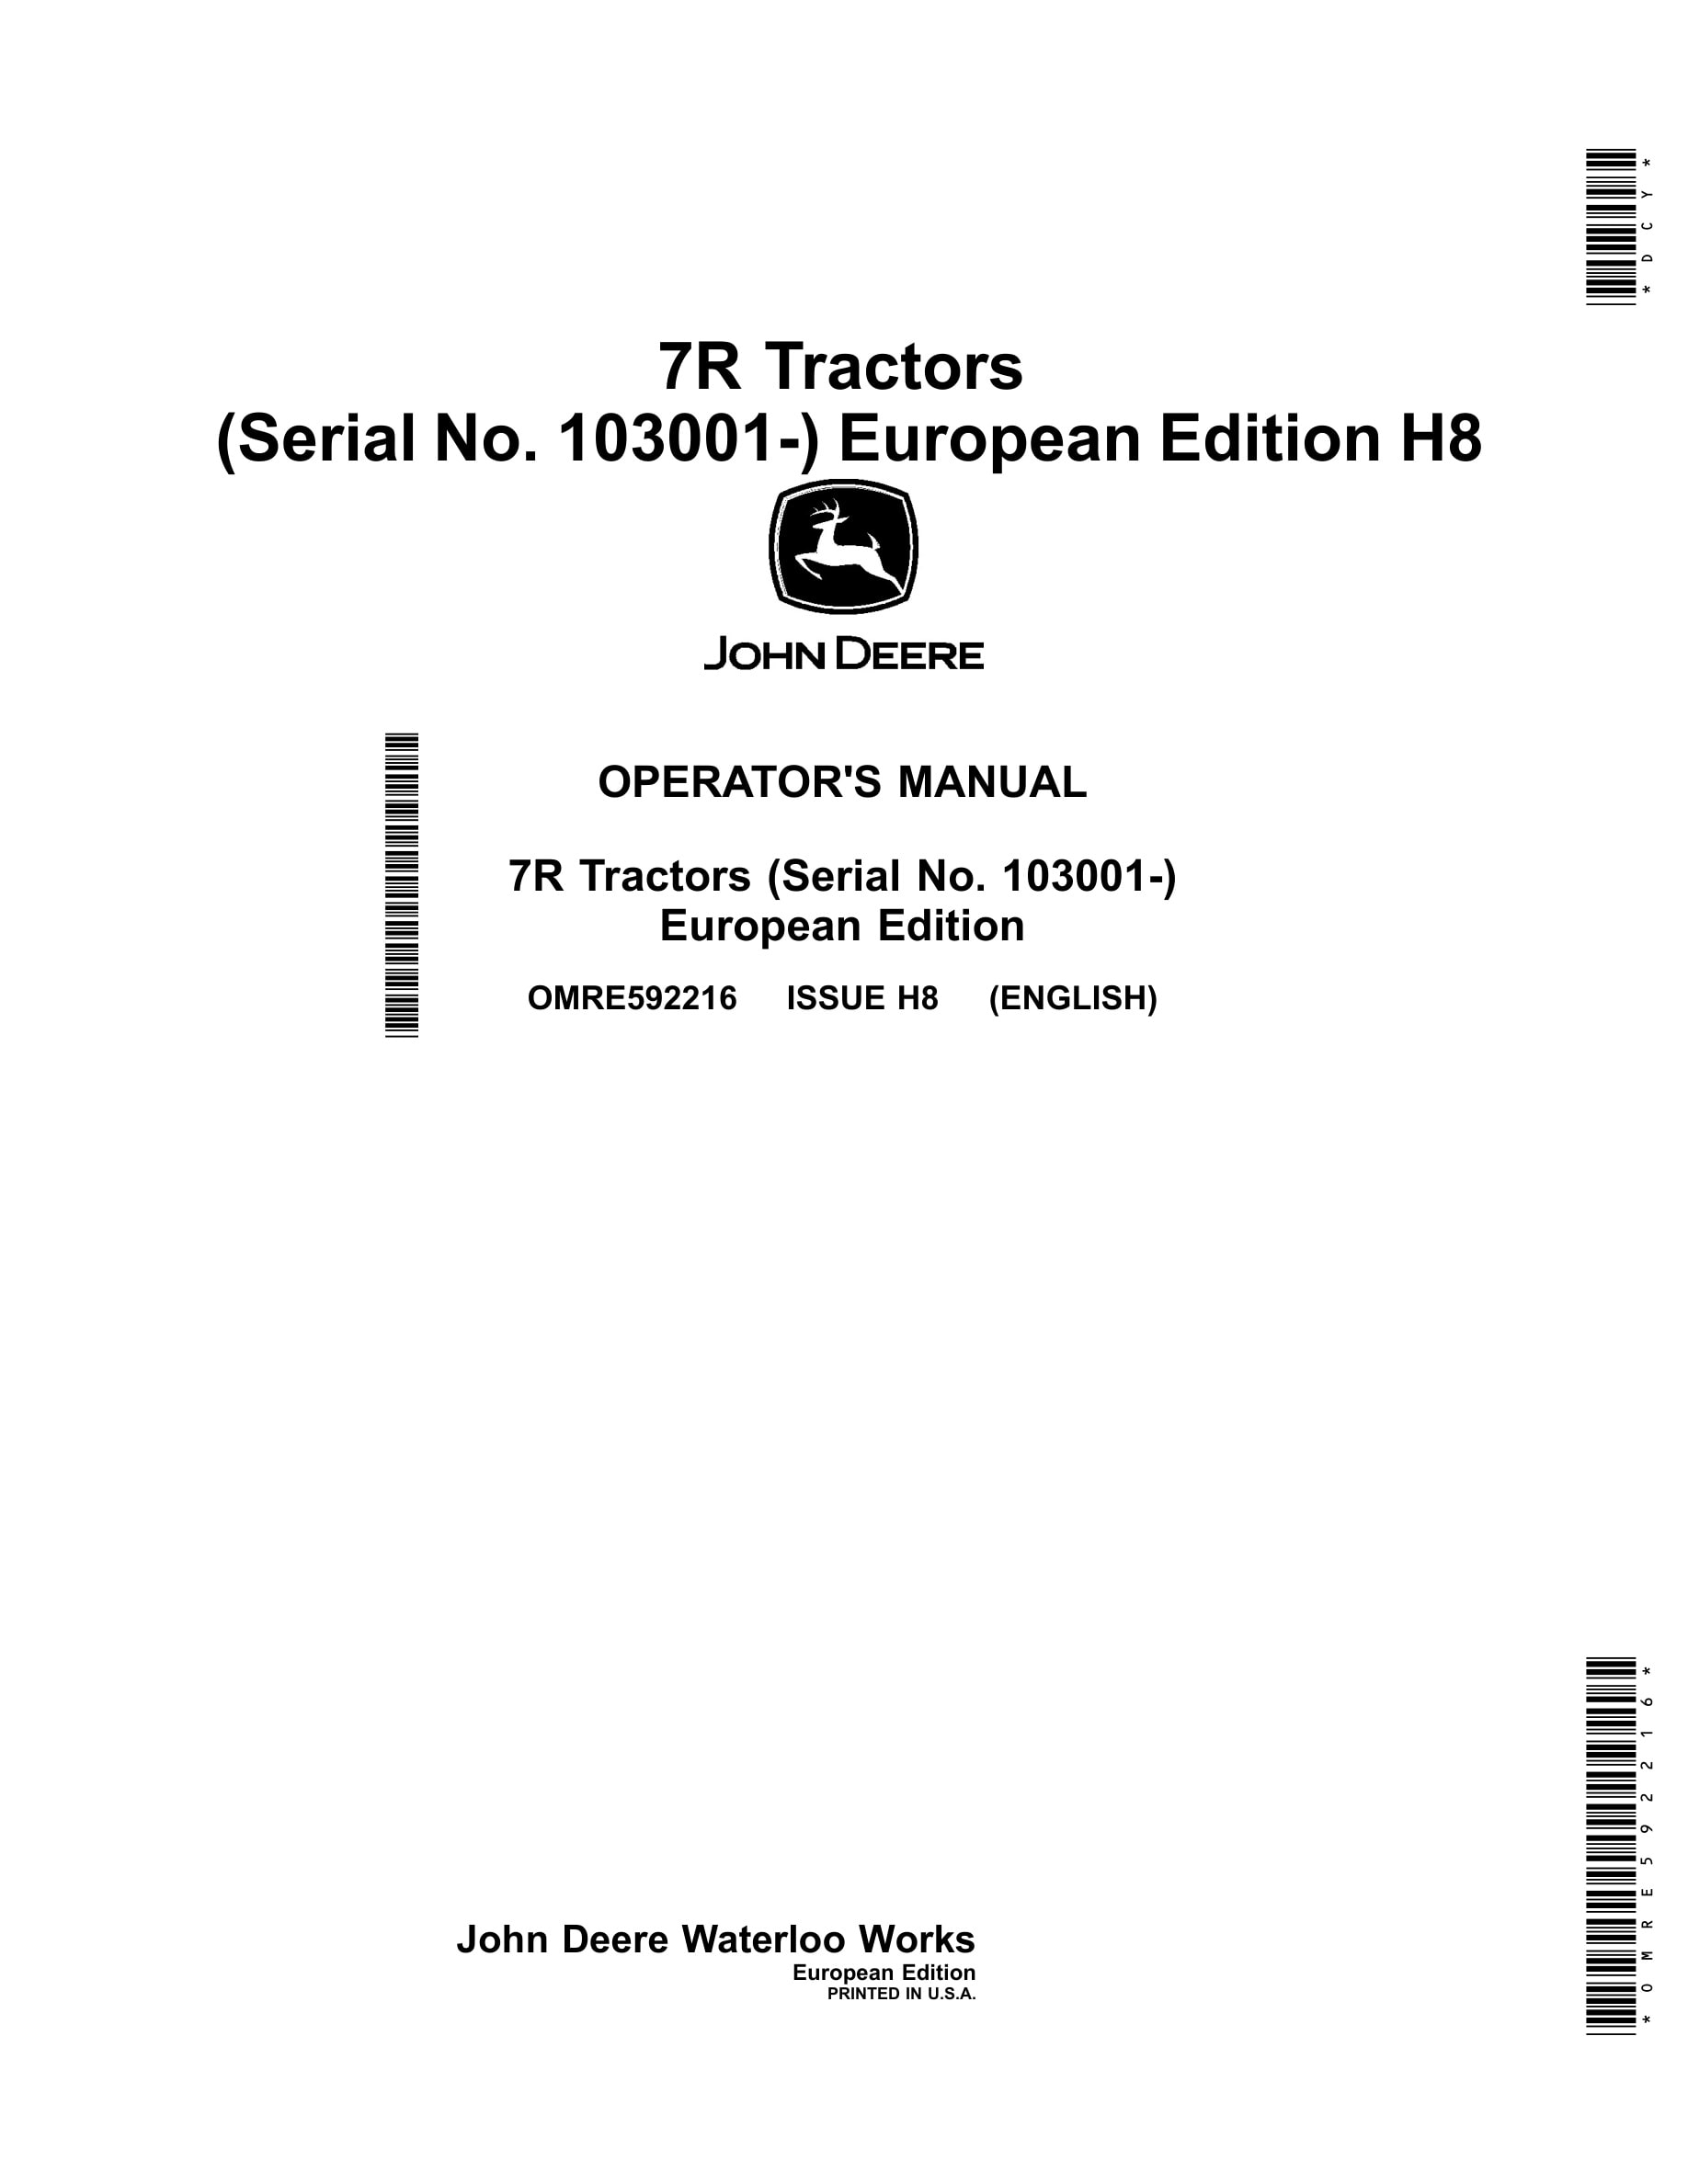 John Deere 7r Tractors Operator Manuals OMRE592216-1